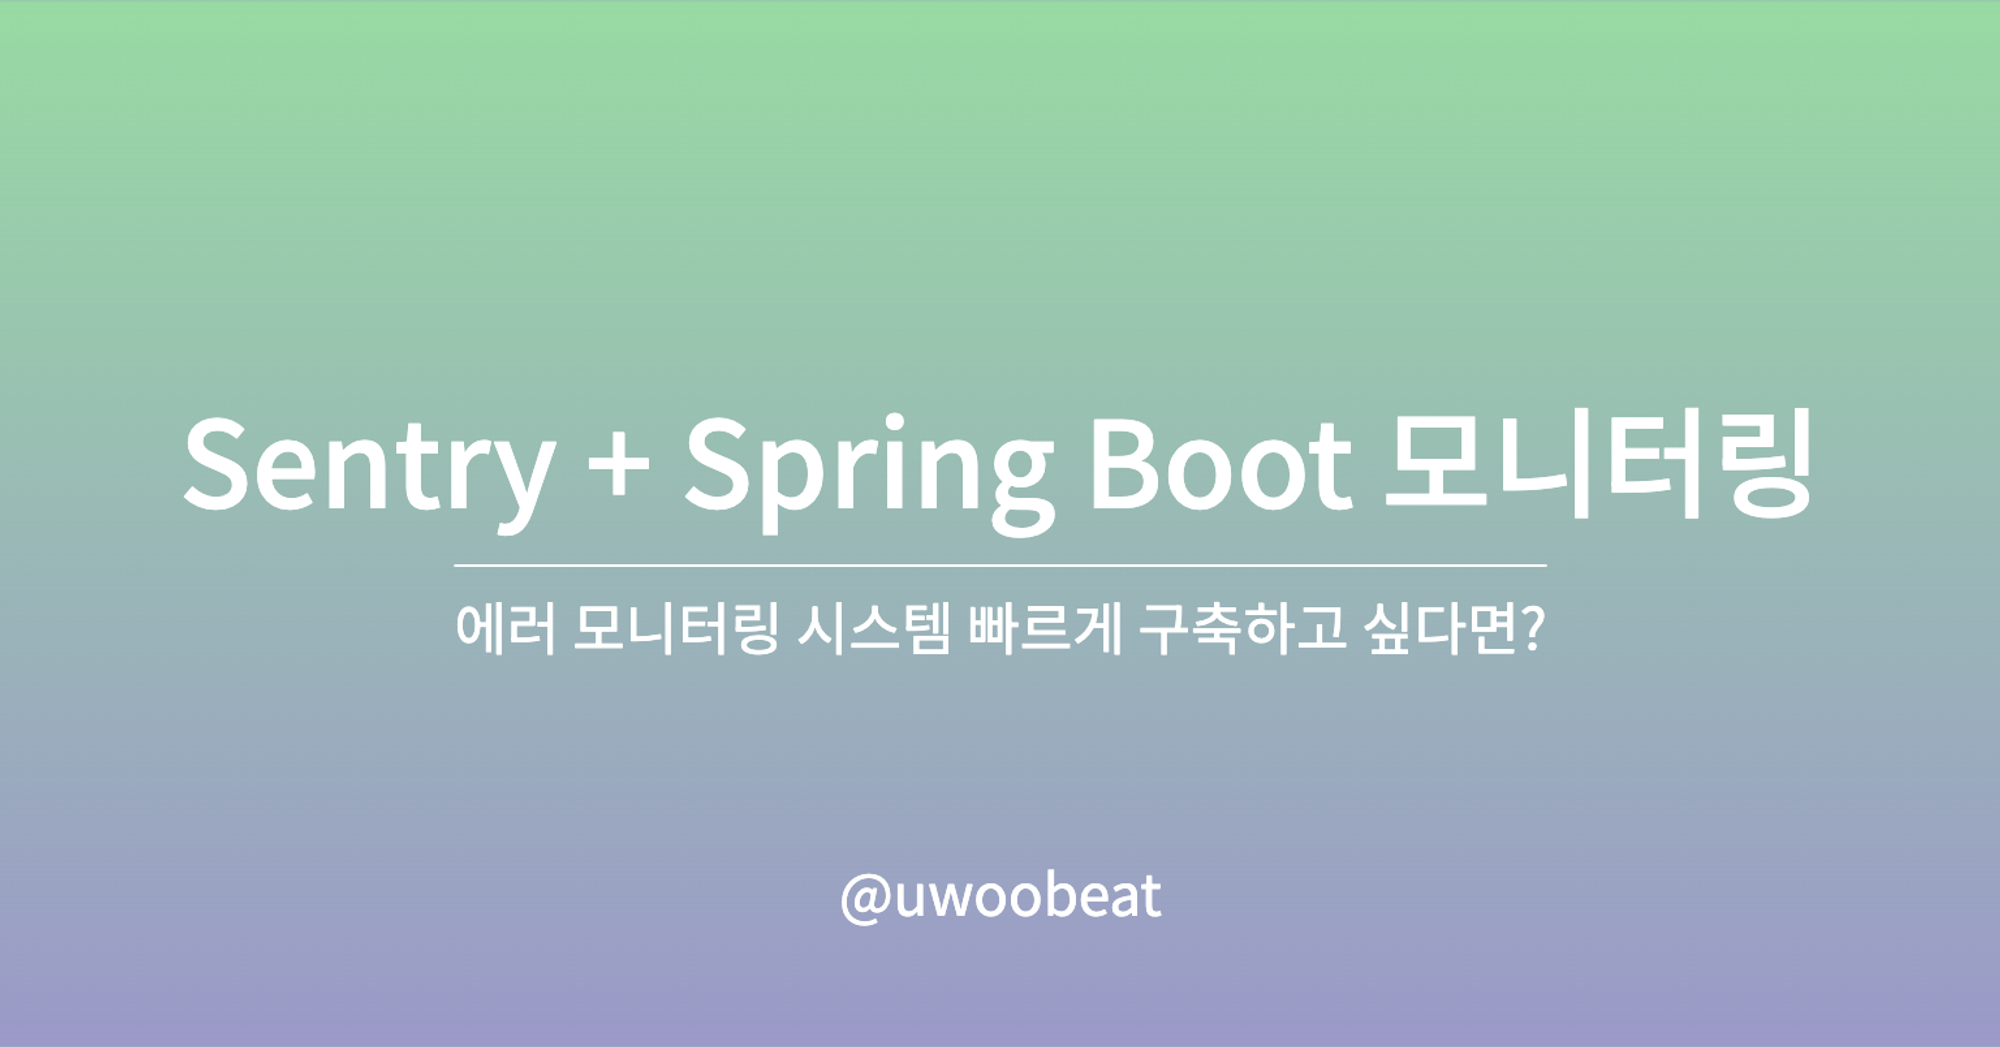 Sentry를 활용한 Spring Boot 모니터링 시스템 구축